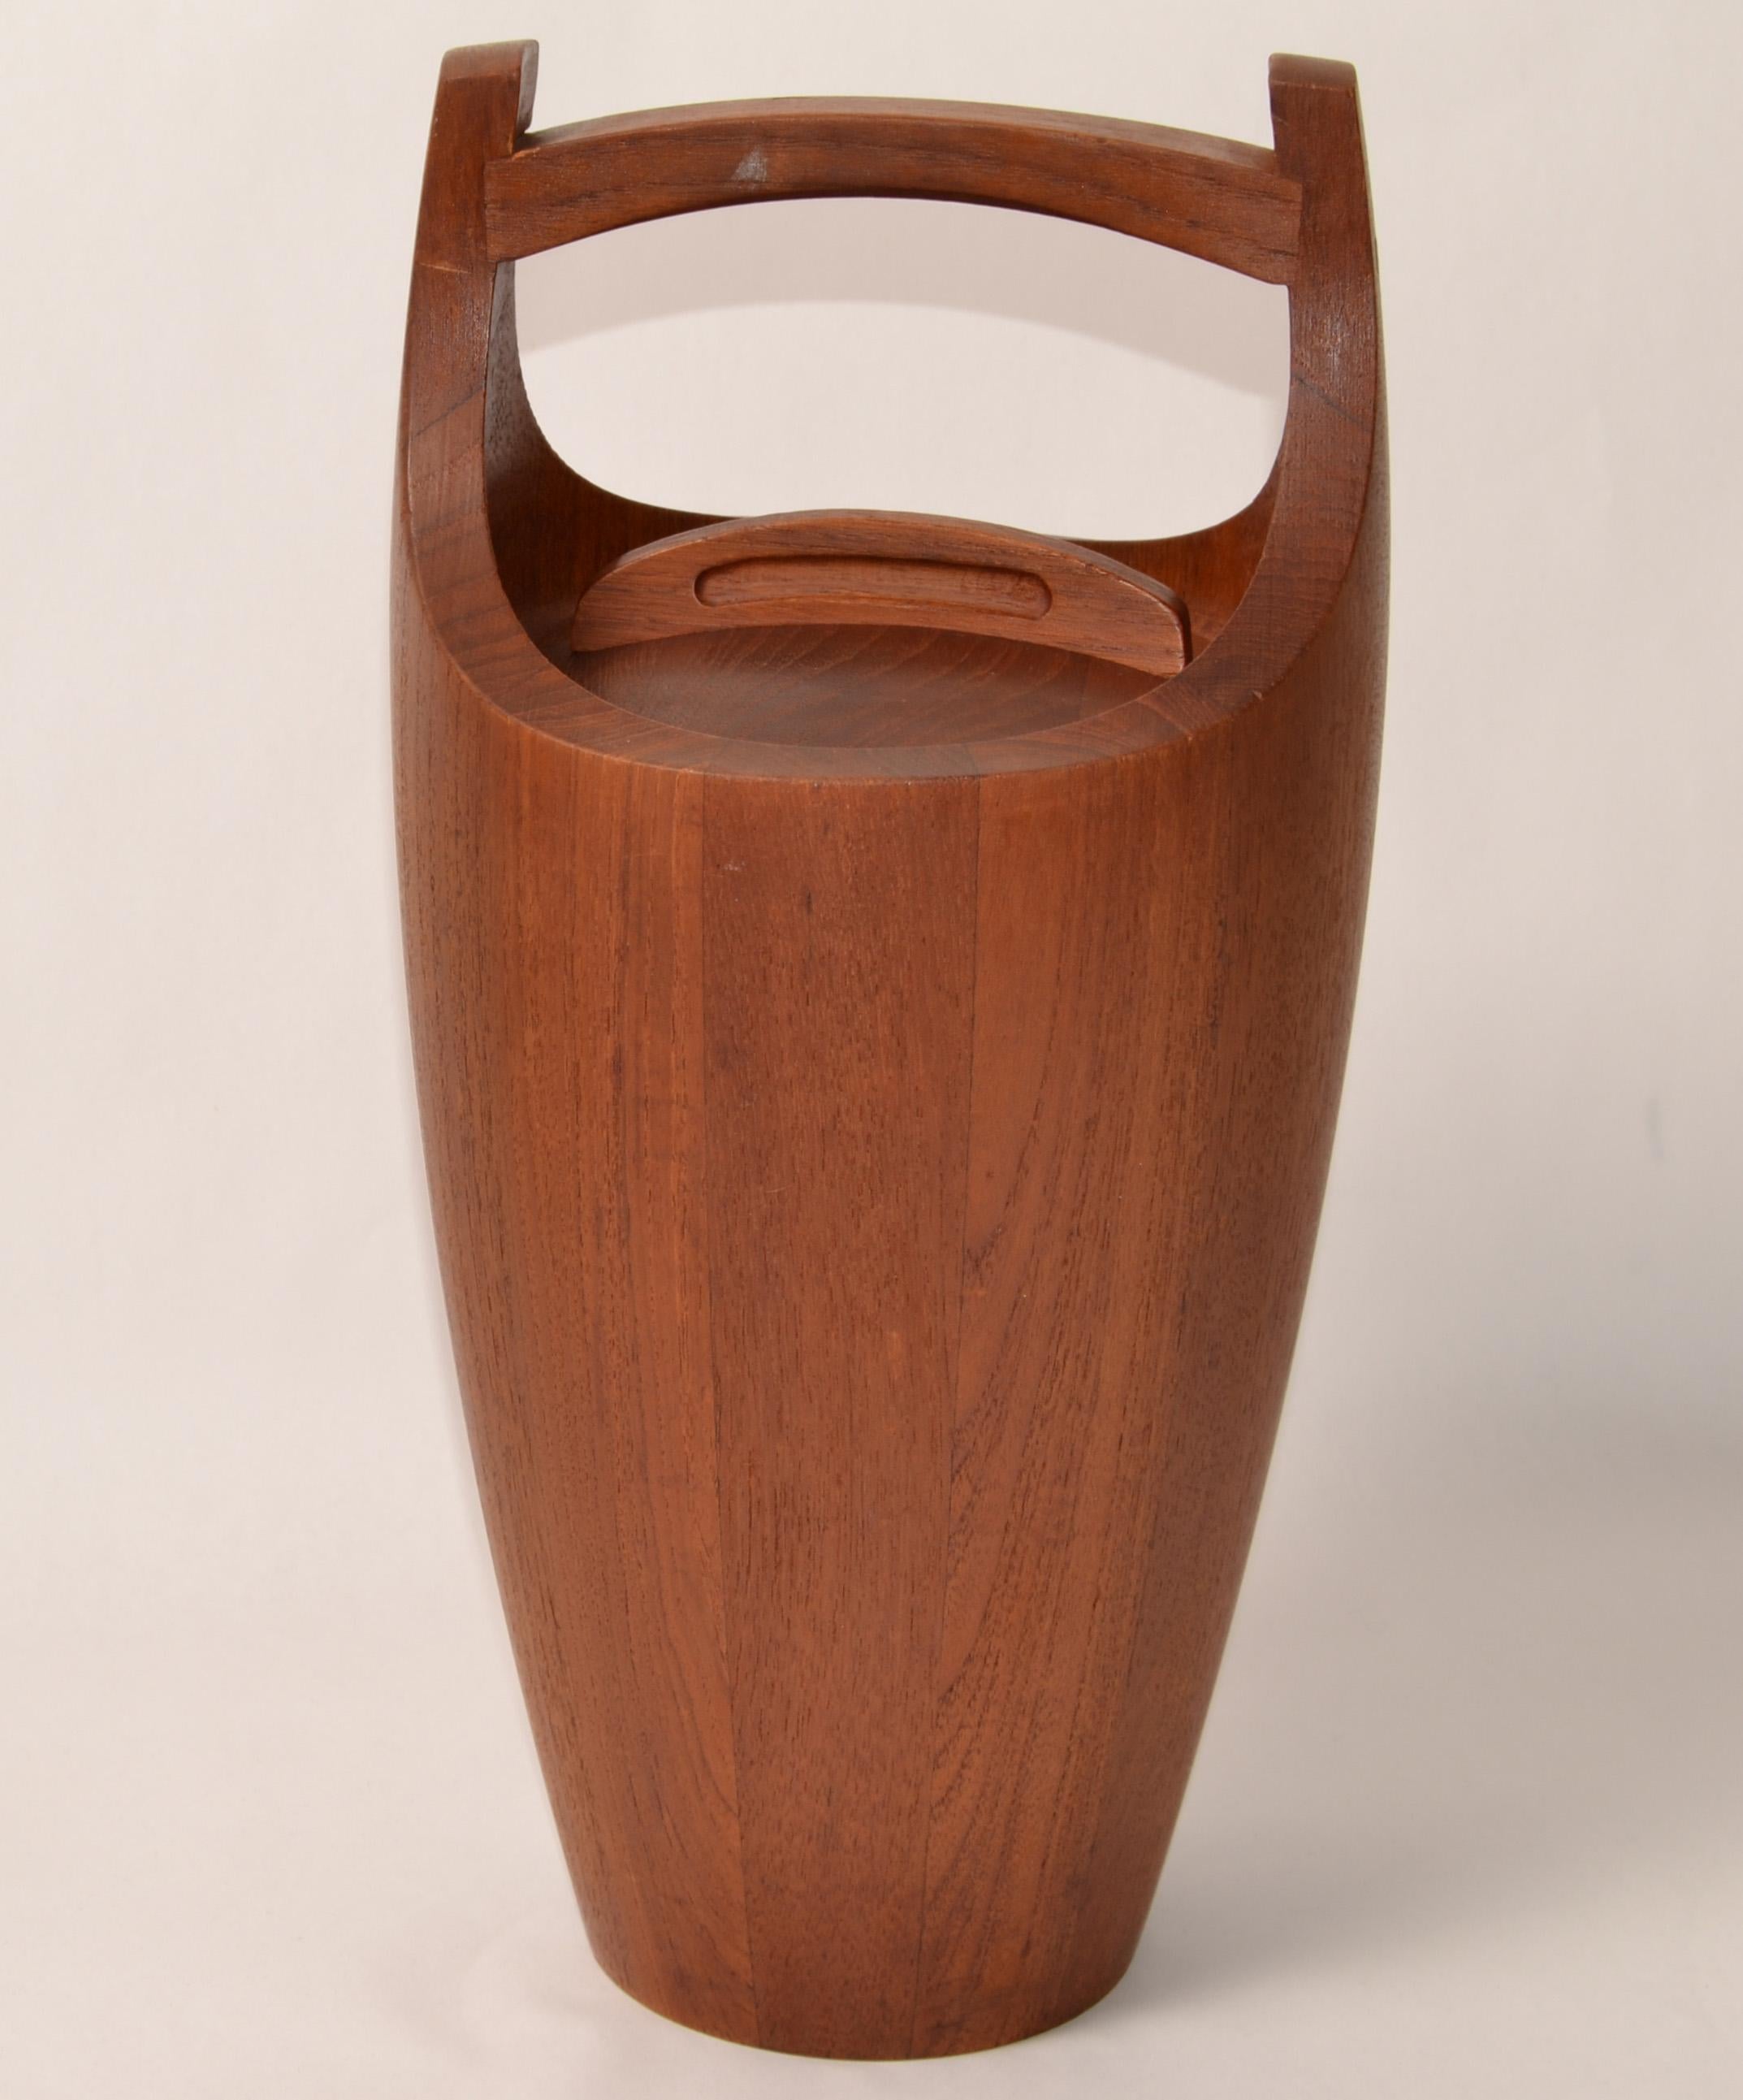 Jens Quistgaard Dansk Designs Scandinavian Modern Staved Teak Lidded Ice Bucket For Sale 7